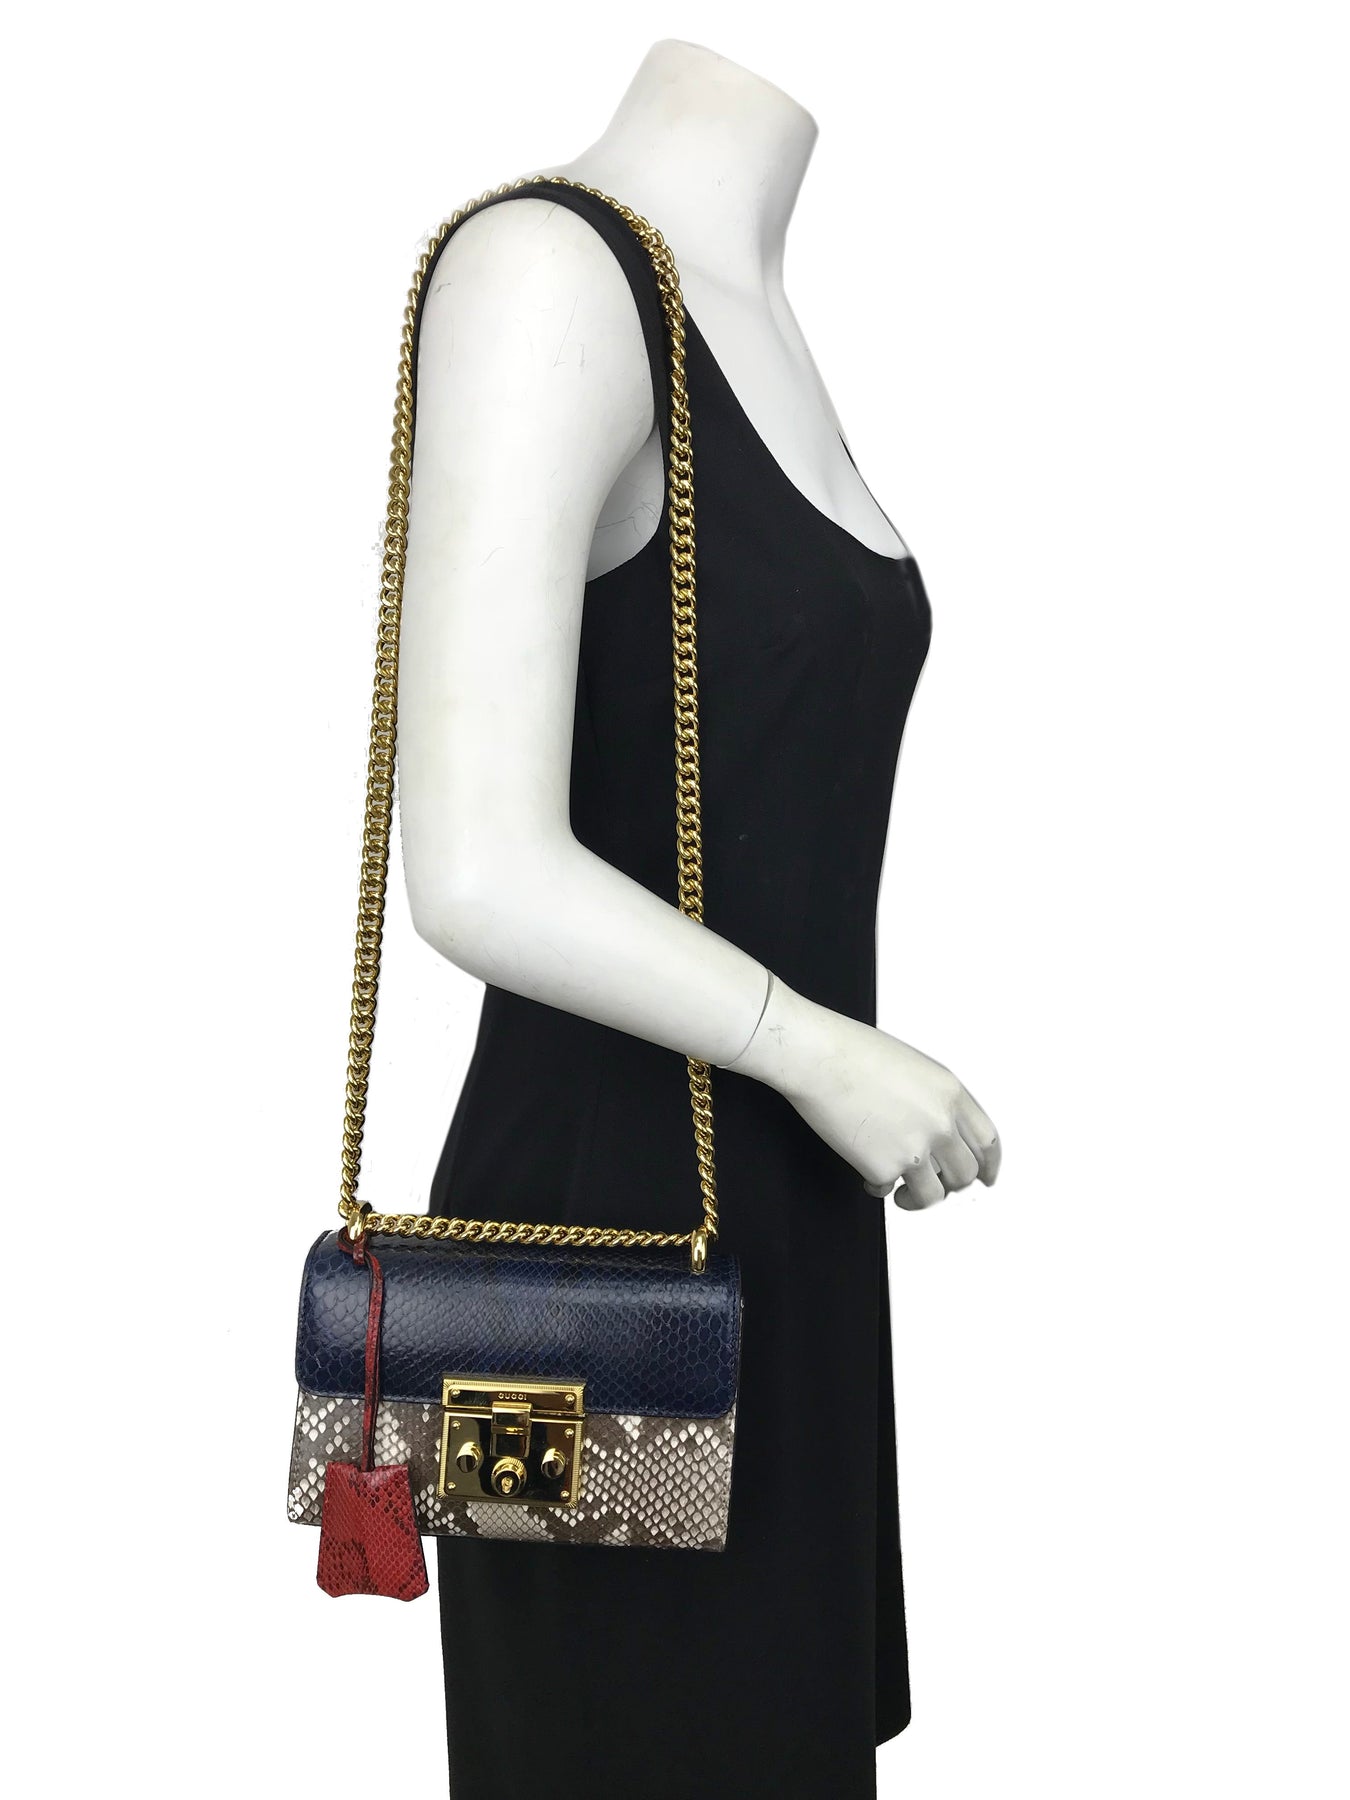 Gucci Padlock Small Python Shoulder Bag - Consigned Designs